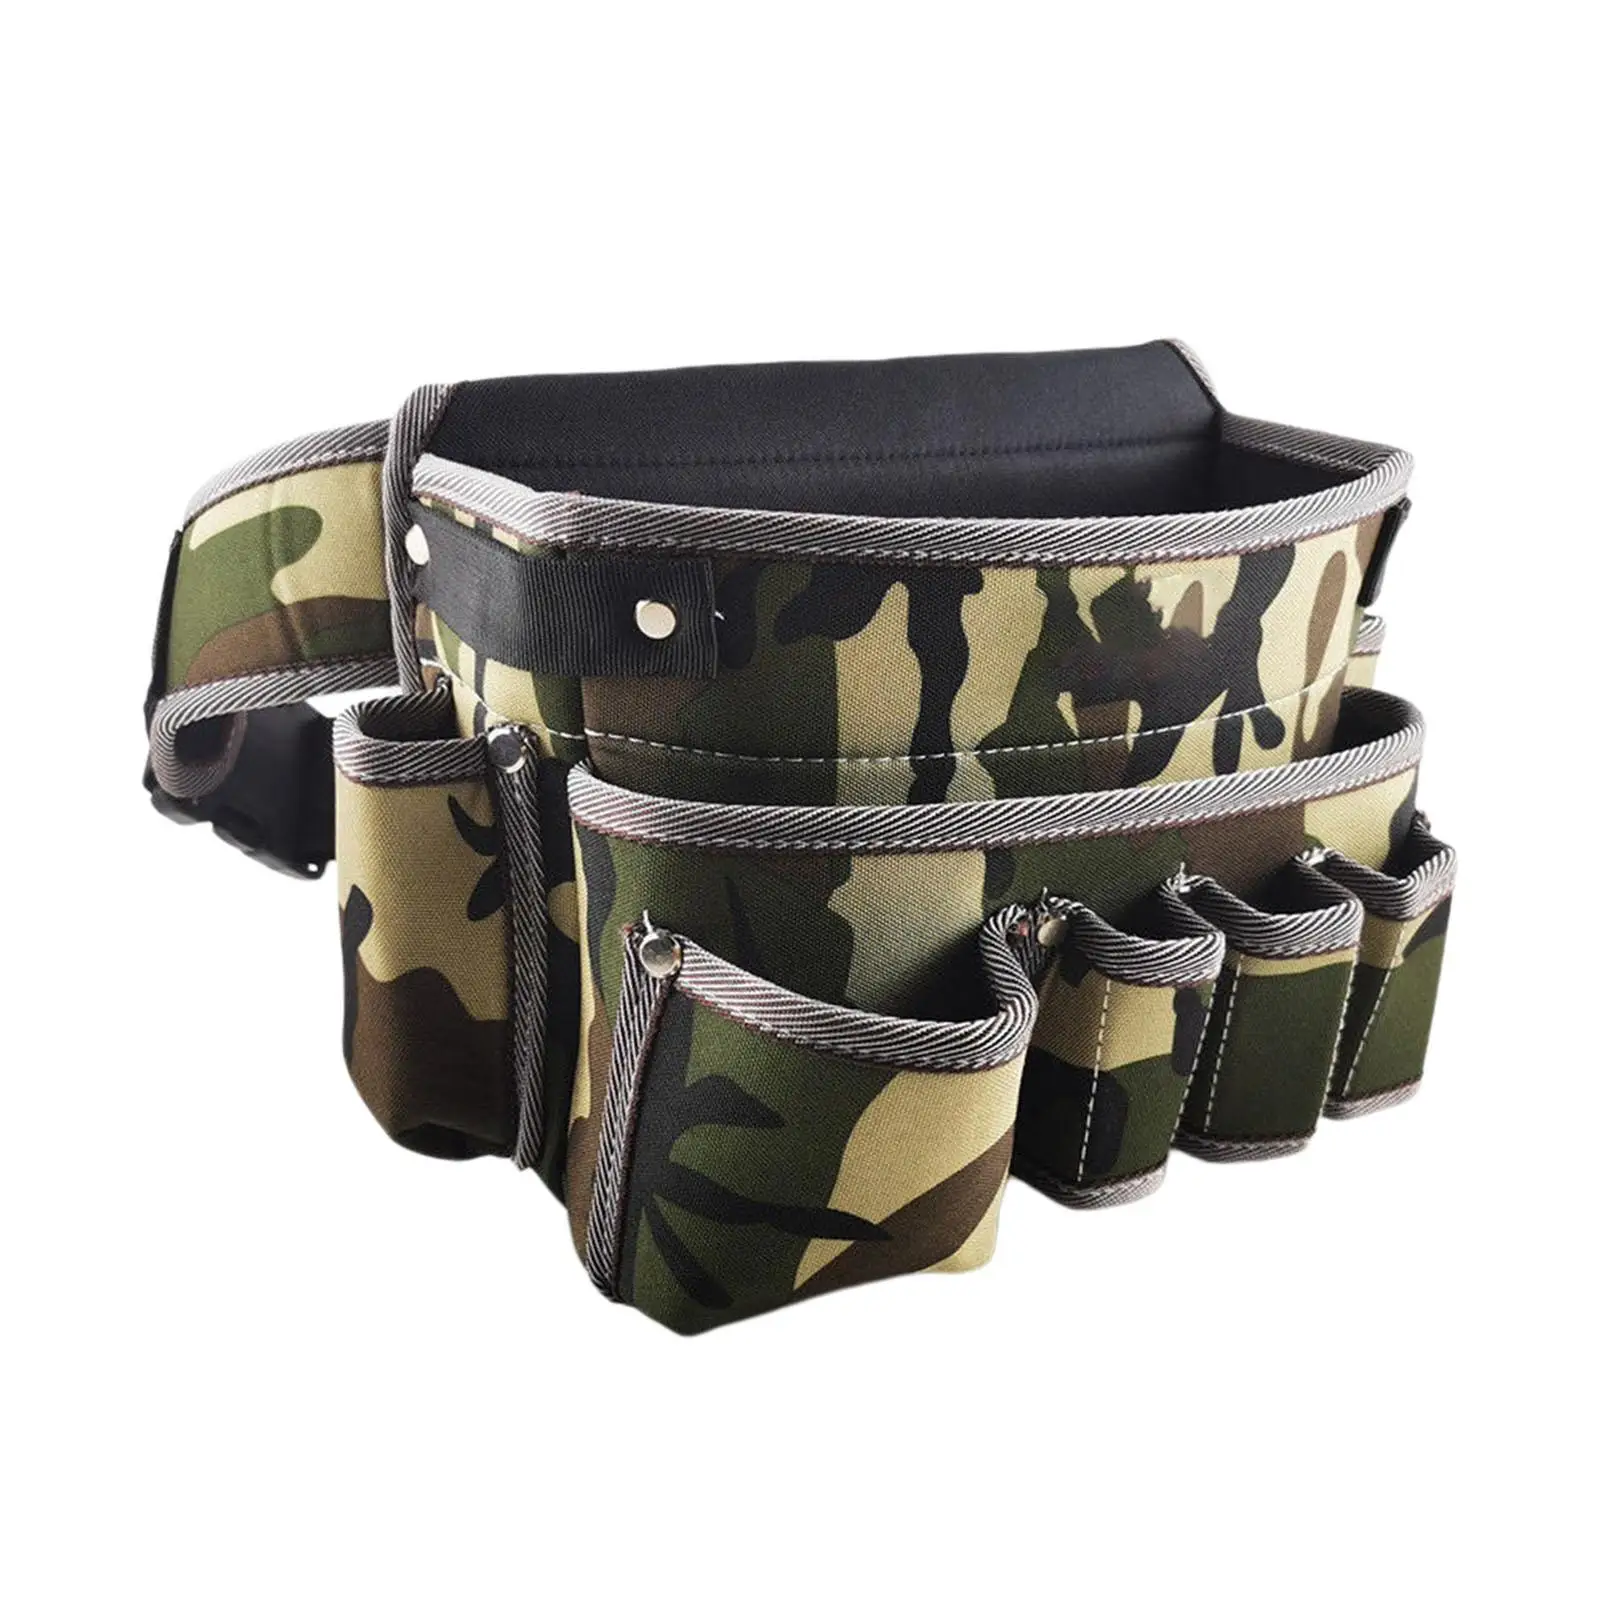 Waist Tools Bag Pocket with Belt Adjustable Portable Multifunctional Practical